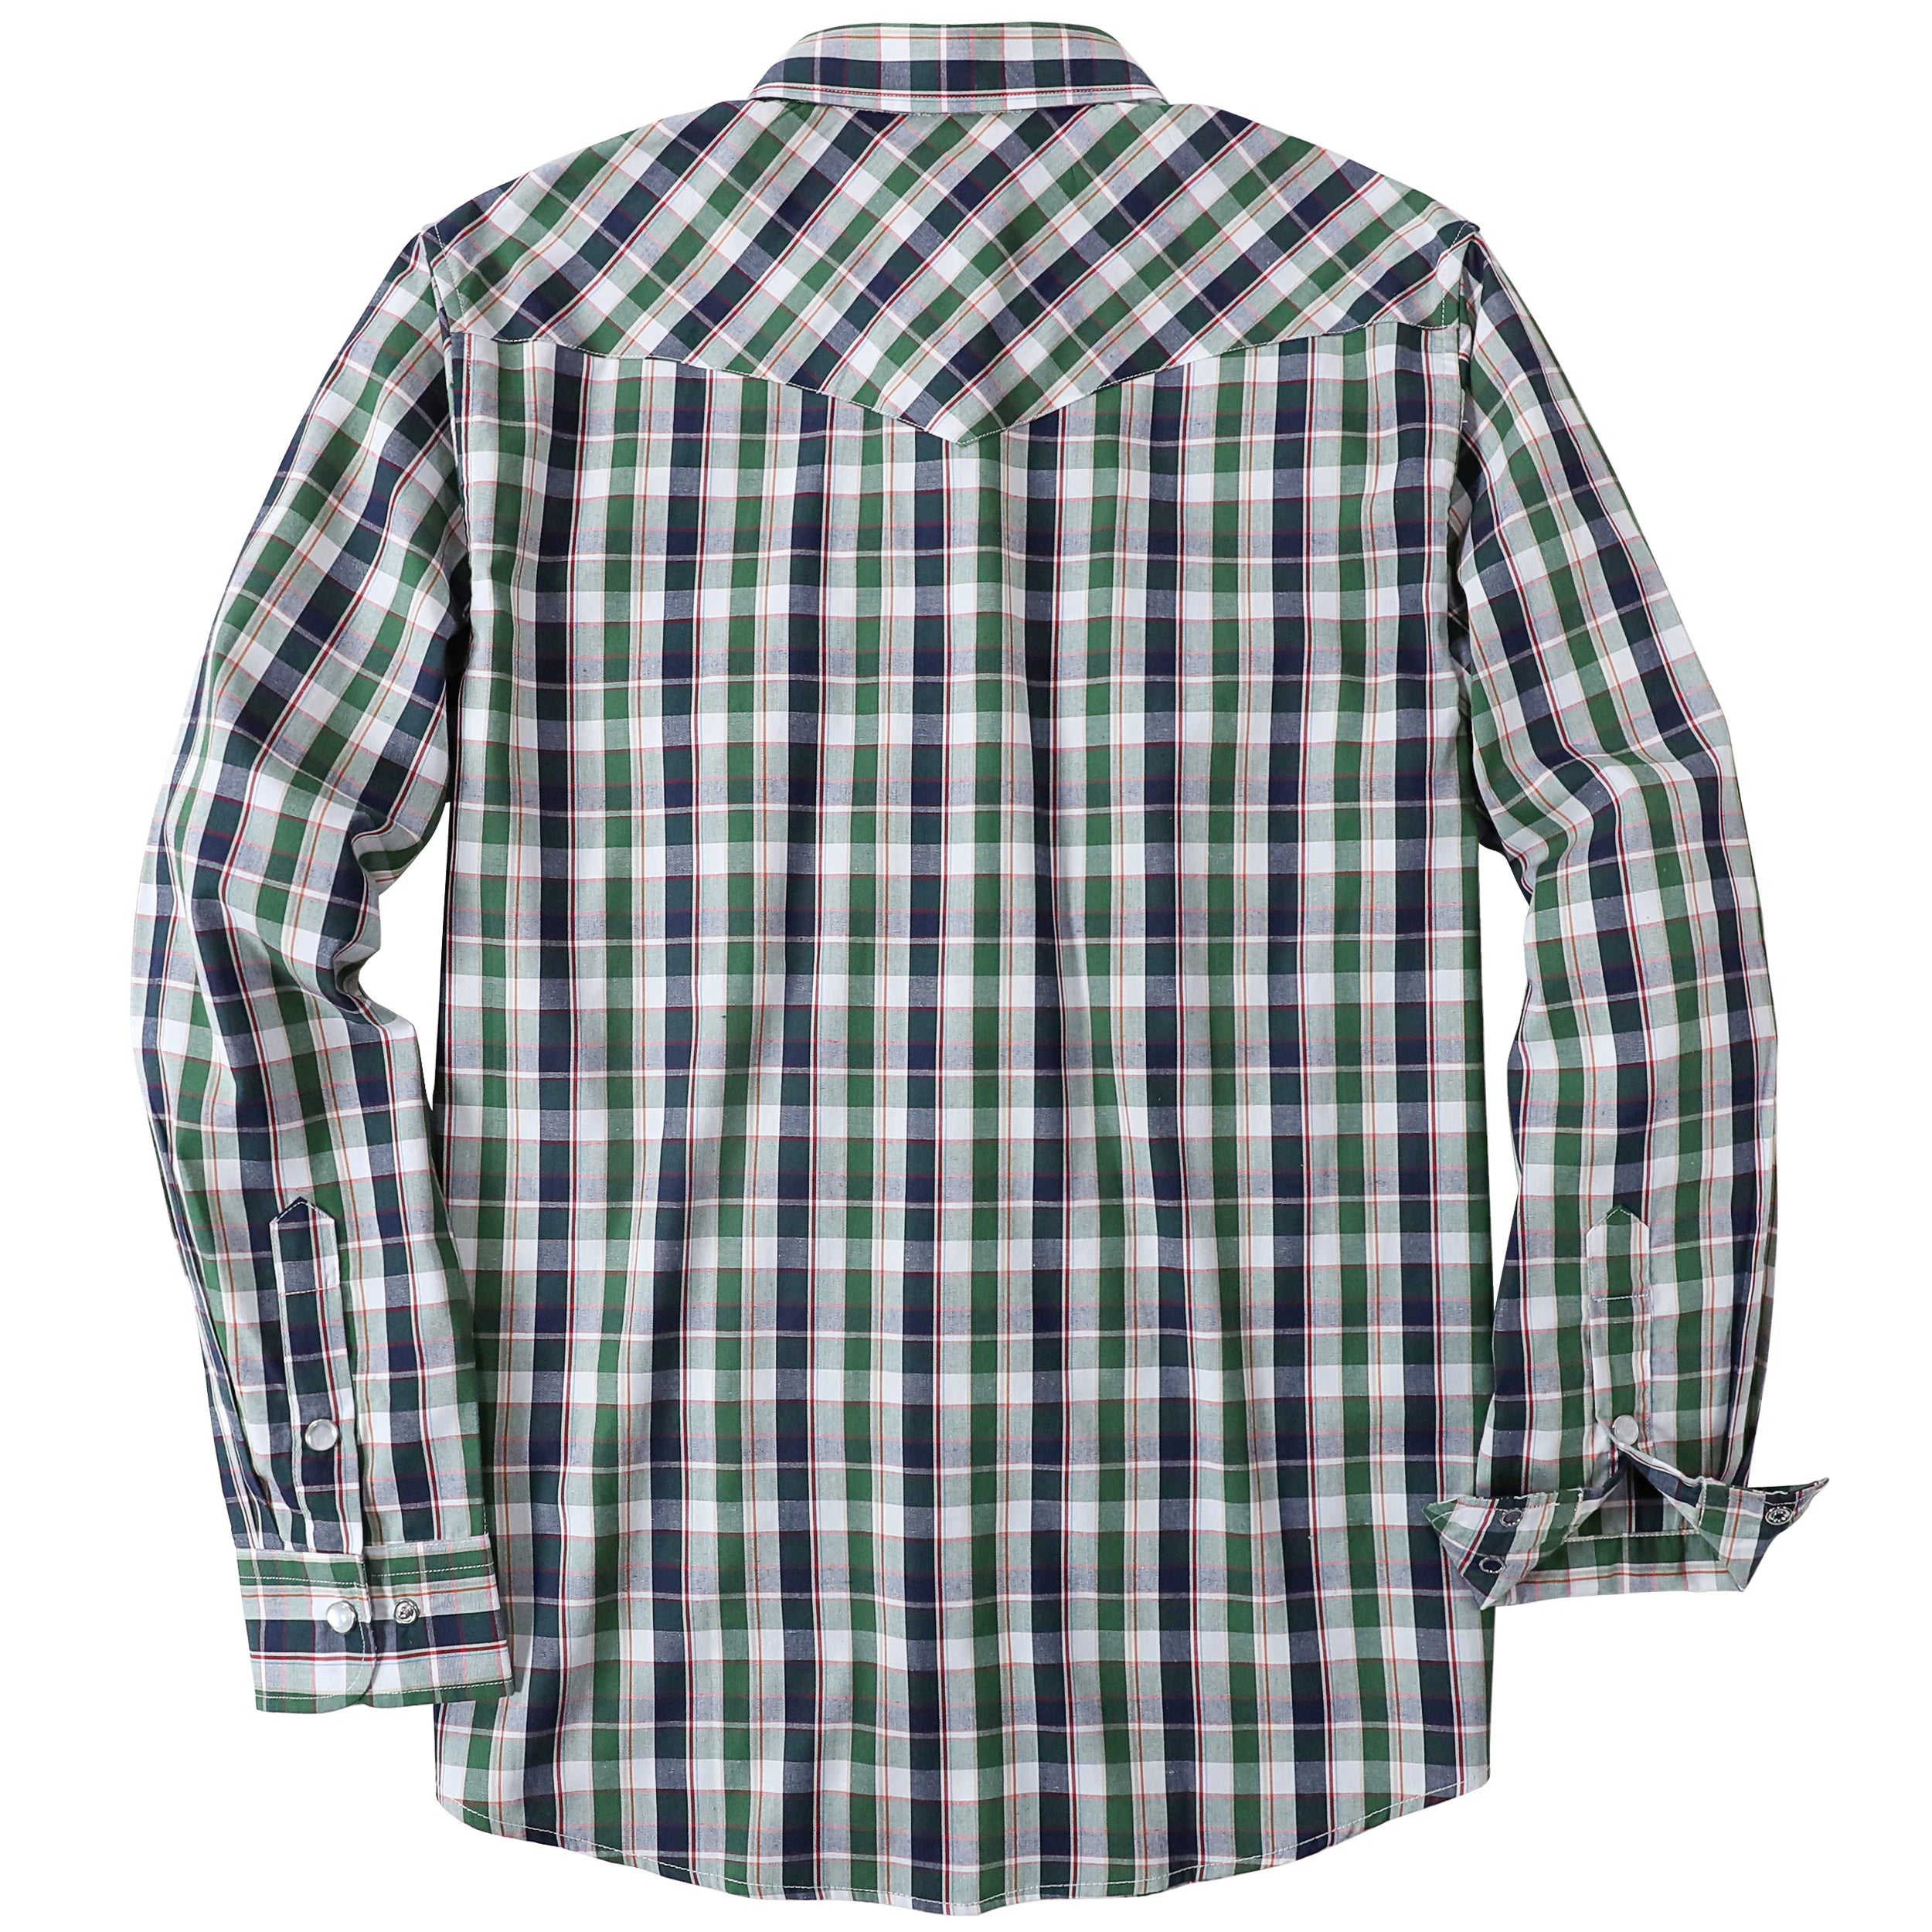 Dubinik® Pearl Snap Shirts for Men Long Sleeve Western Shirts for Men Vintage Casual Plaid Shirt Cowboy Shirts for Men#42002